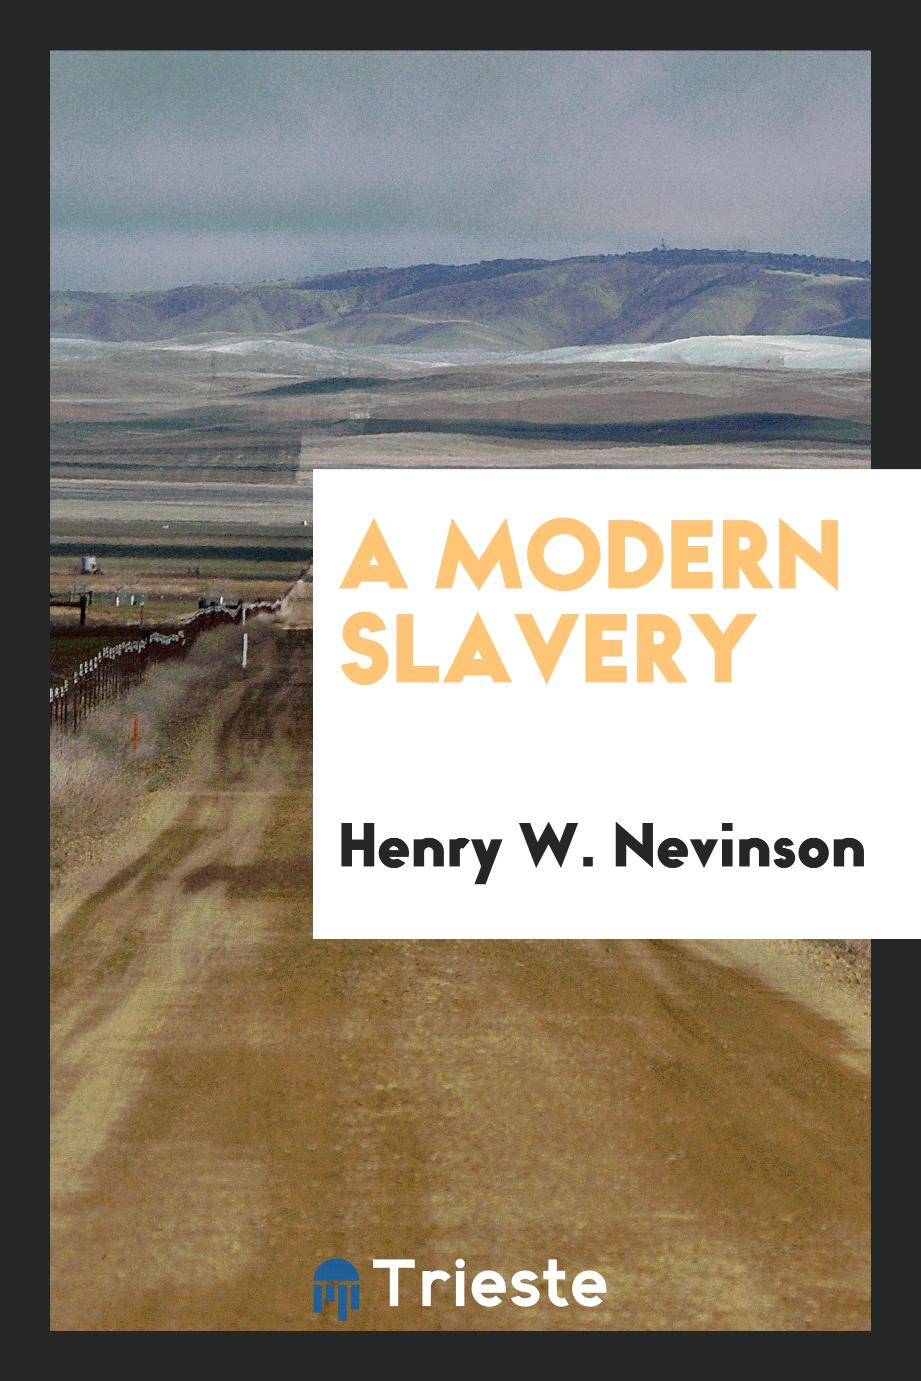 A modern slavery